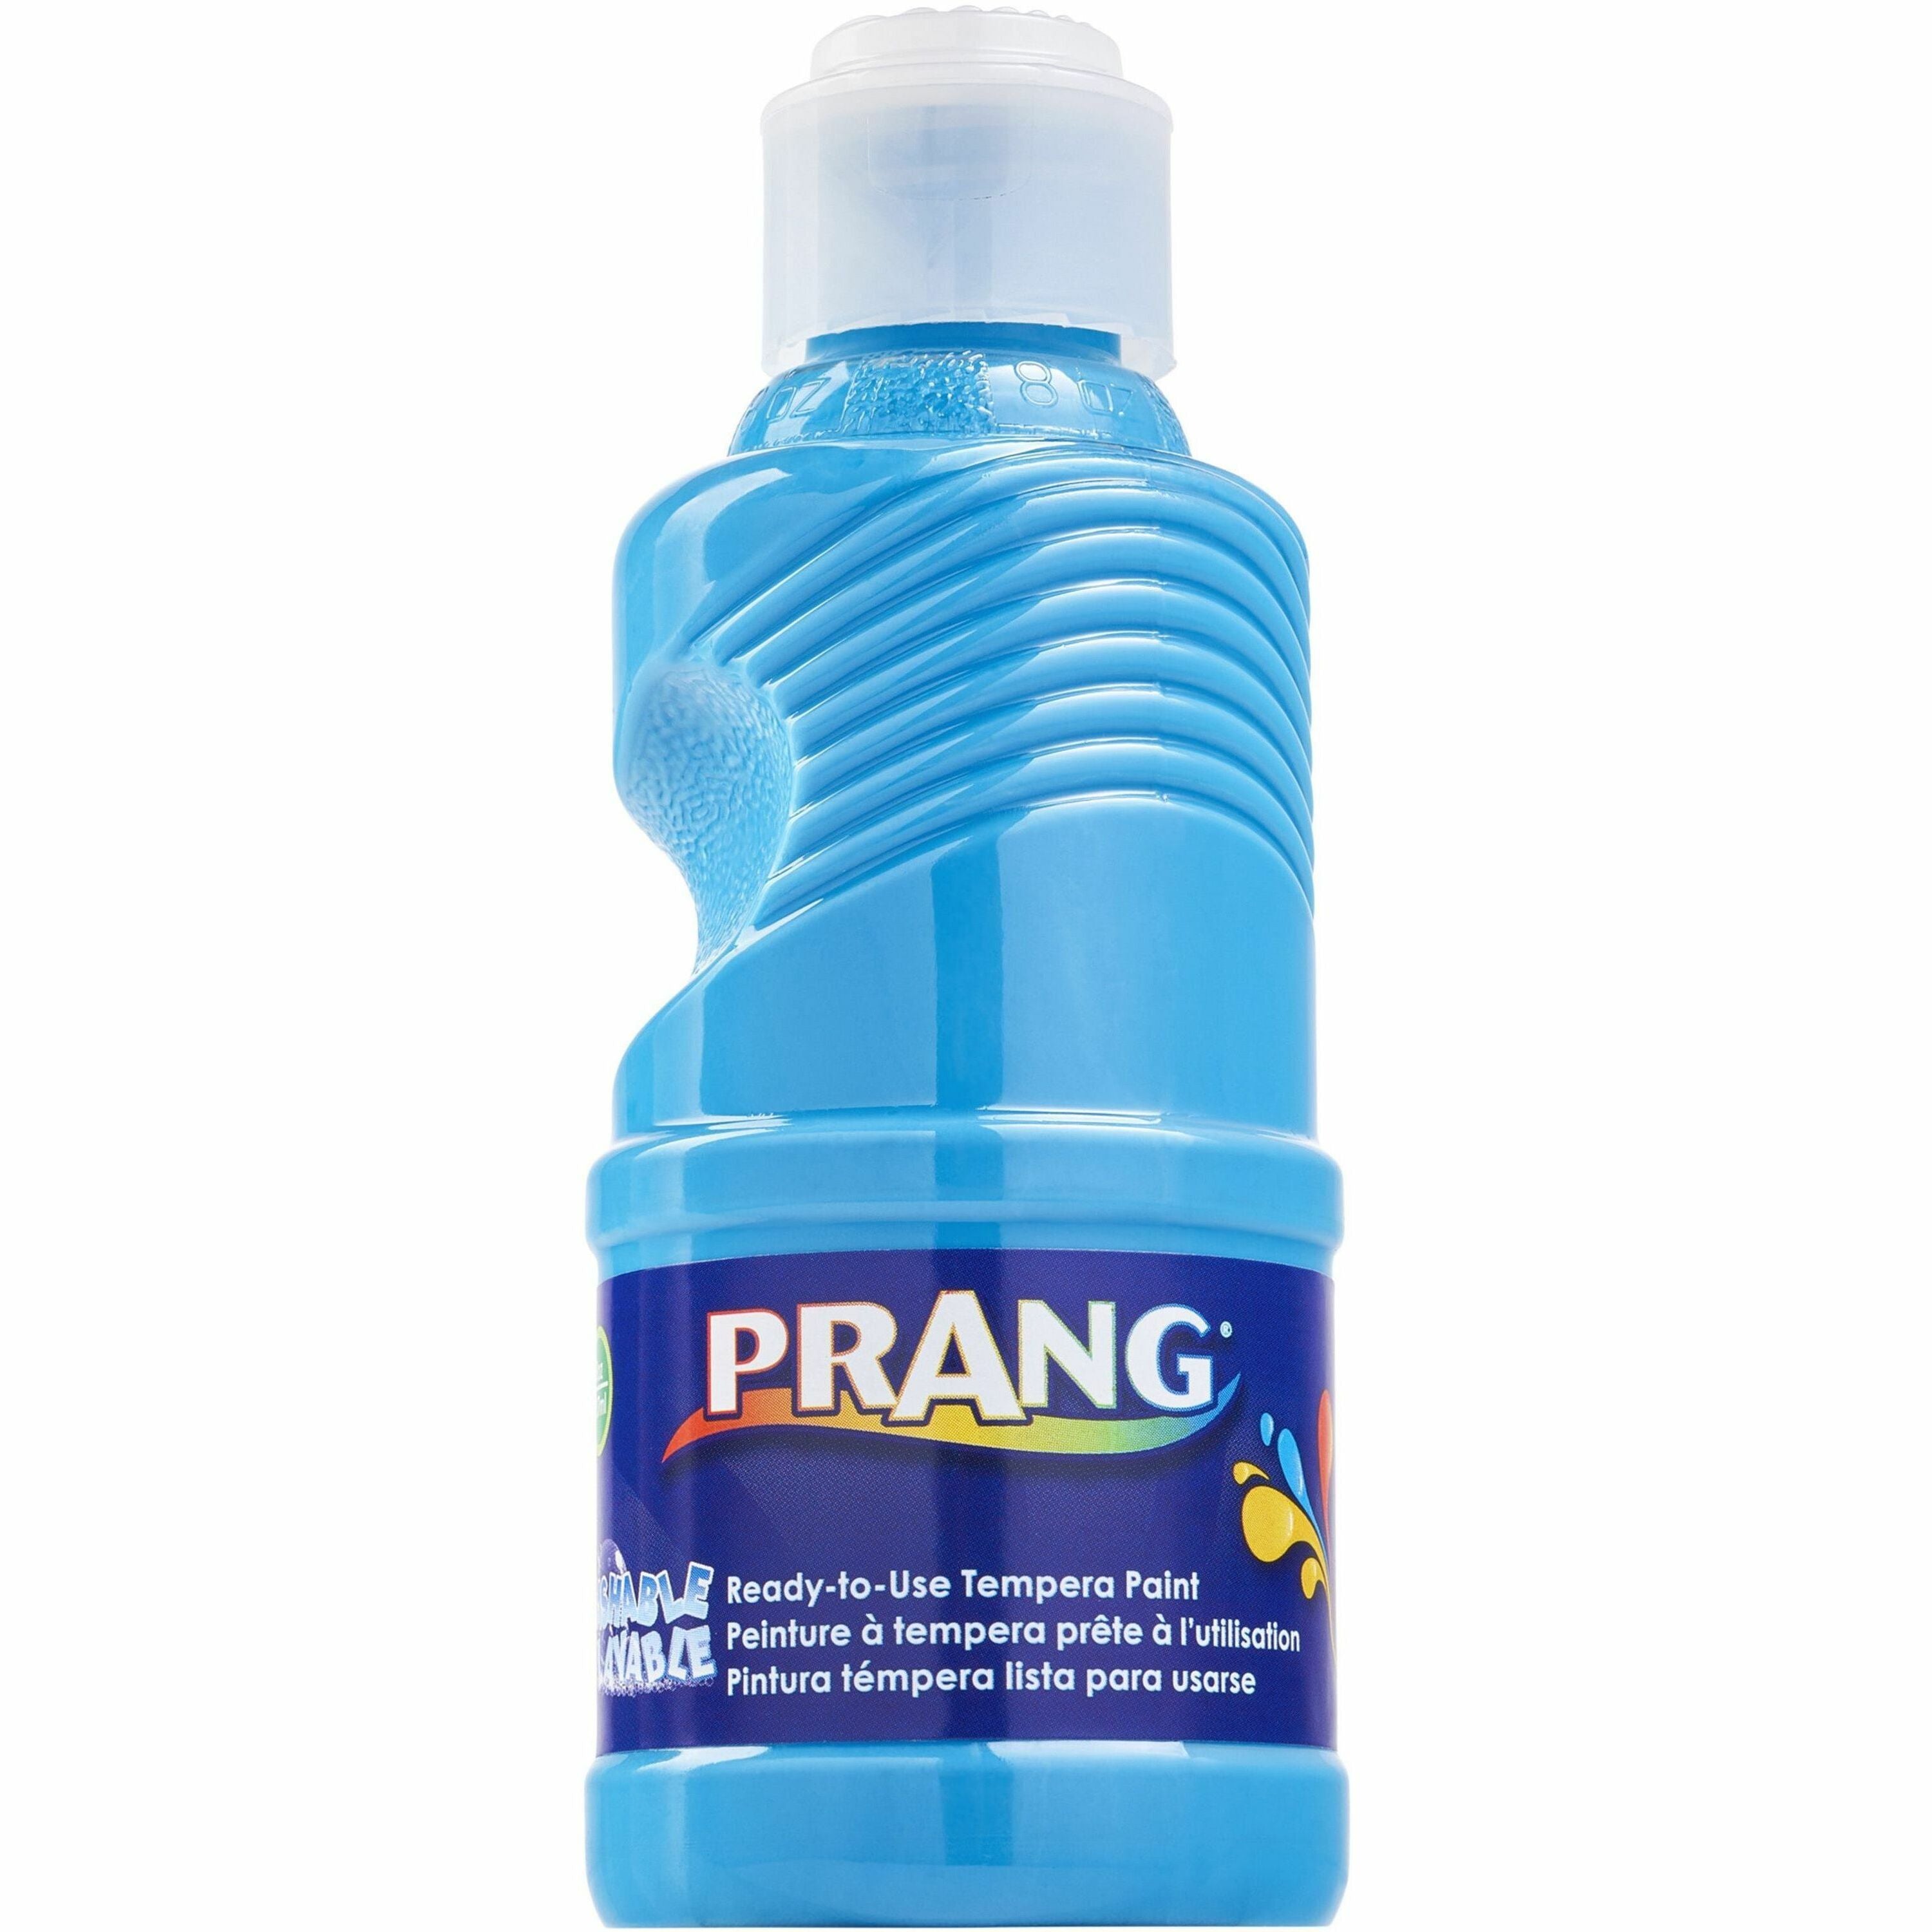 prang-ready-to-use-washable-tempera-paint-8-fl-oz-1-each-blue_dixx10812 - 1